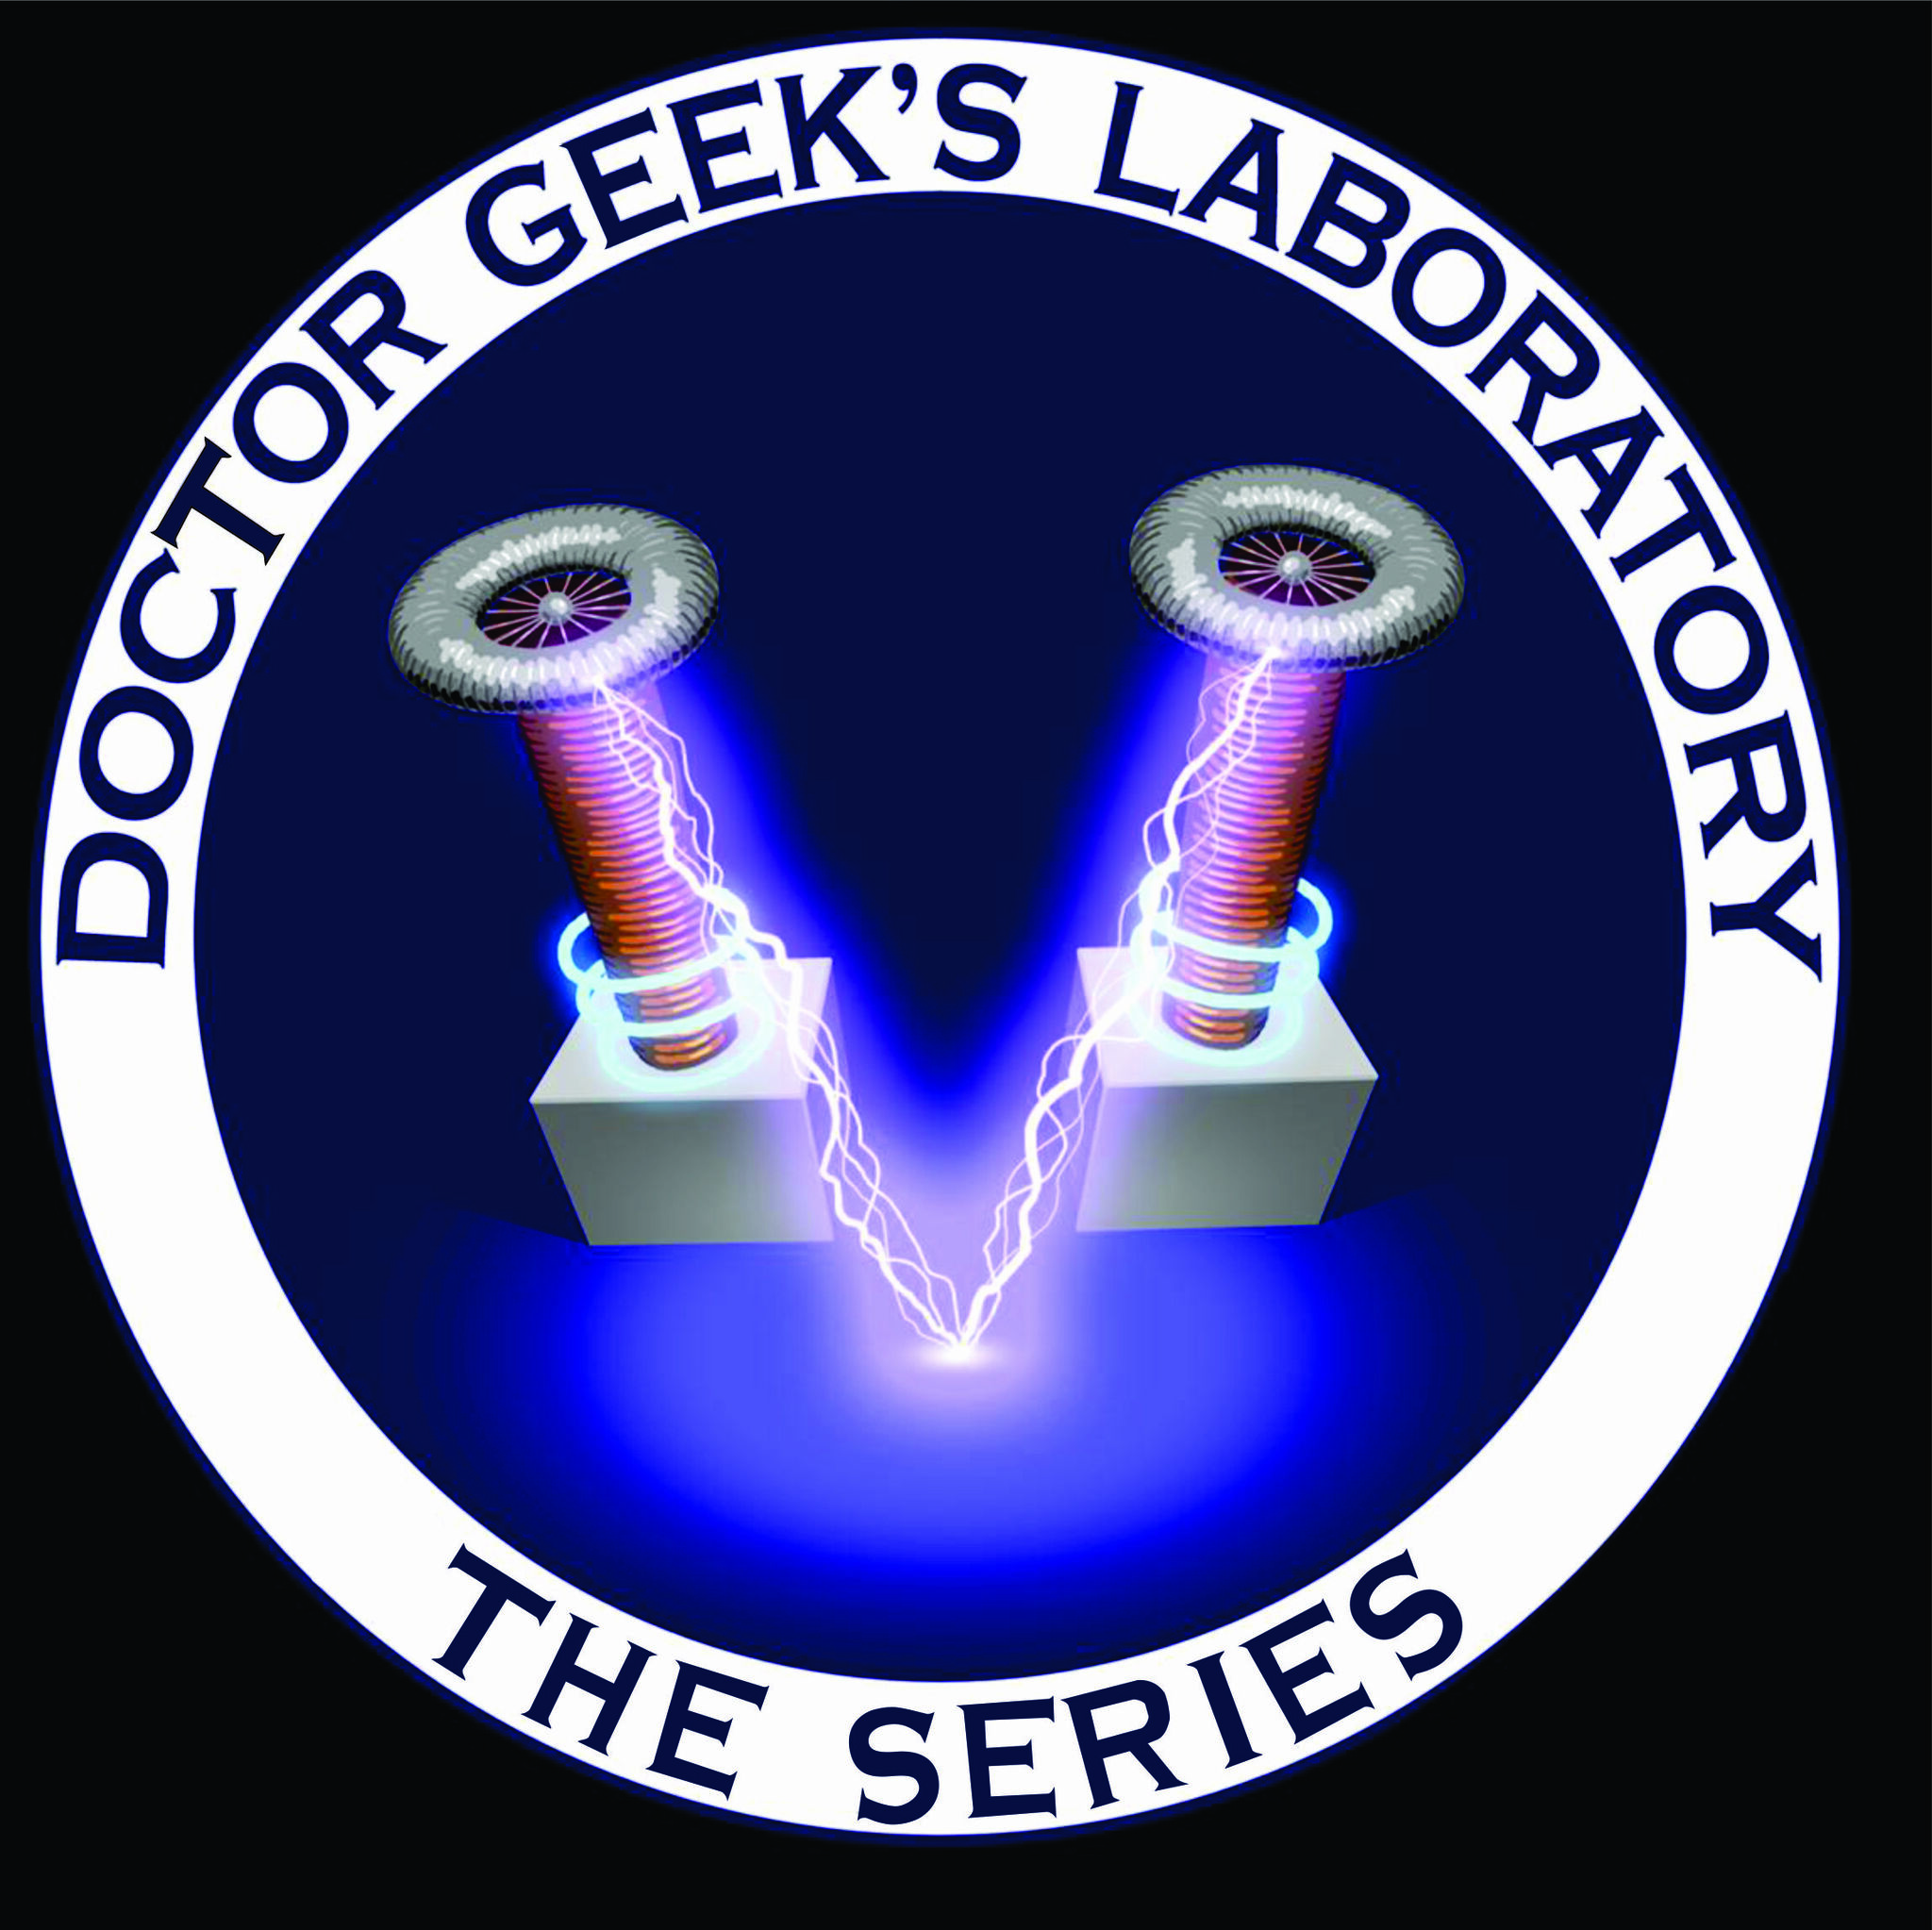 Doctor Geek's Laboratory of Applied Geekdom